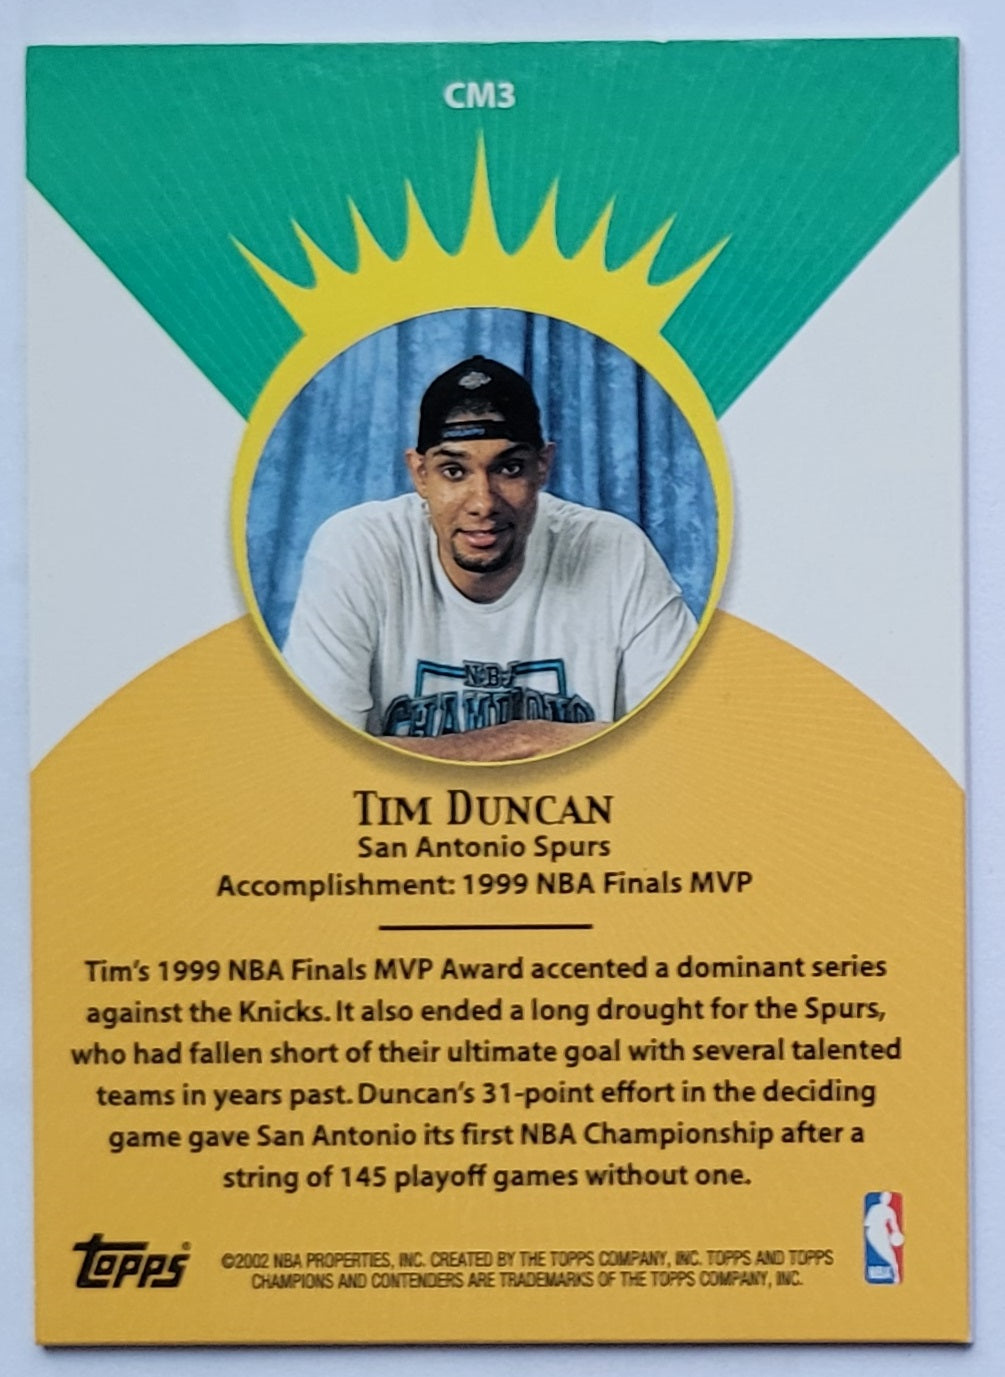 Tim Duncan - 2001-02 Topps TCC Crowning Moment #CM3